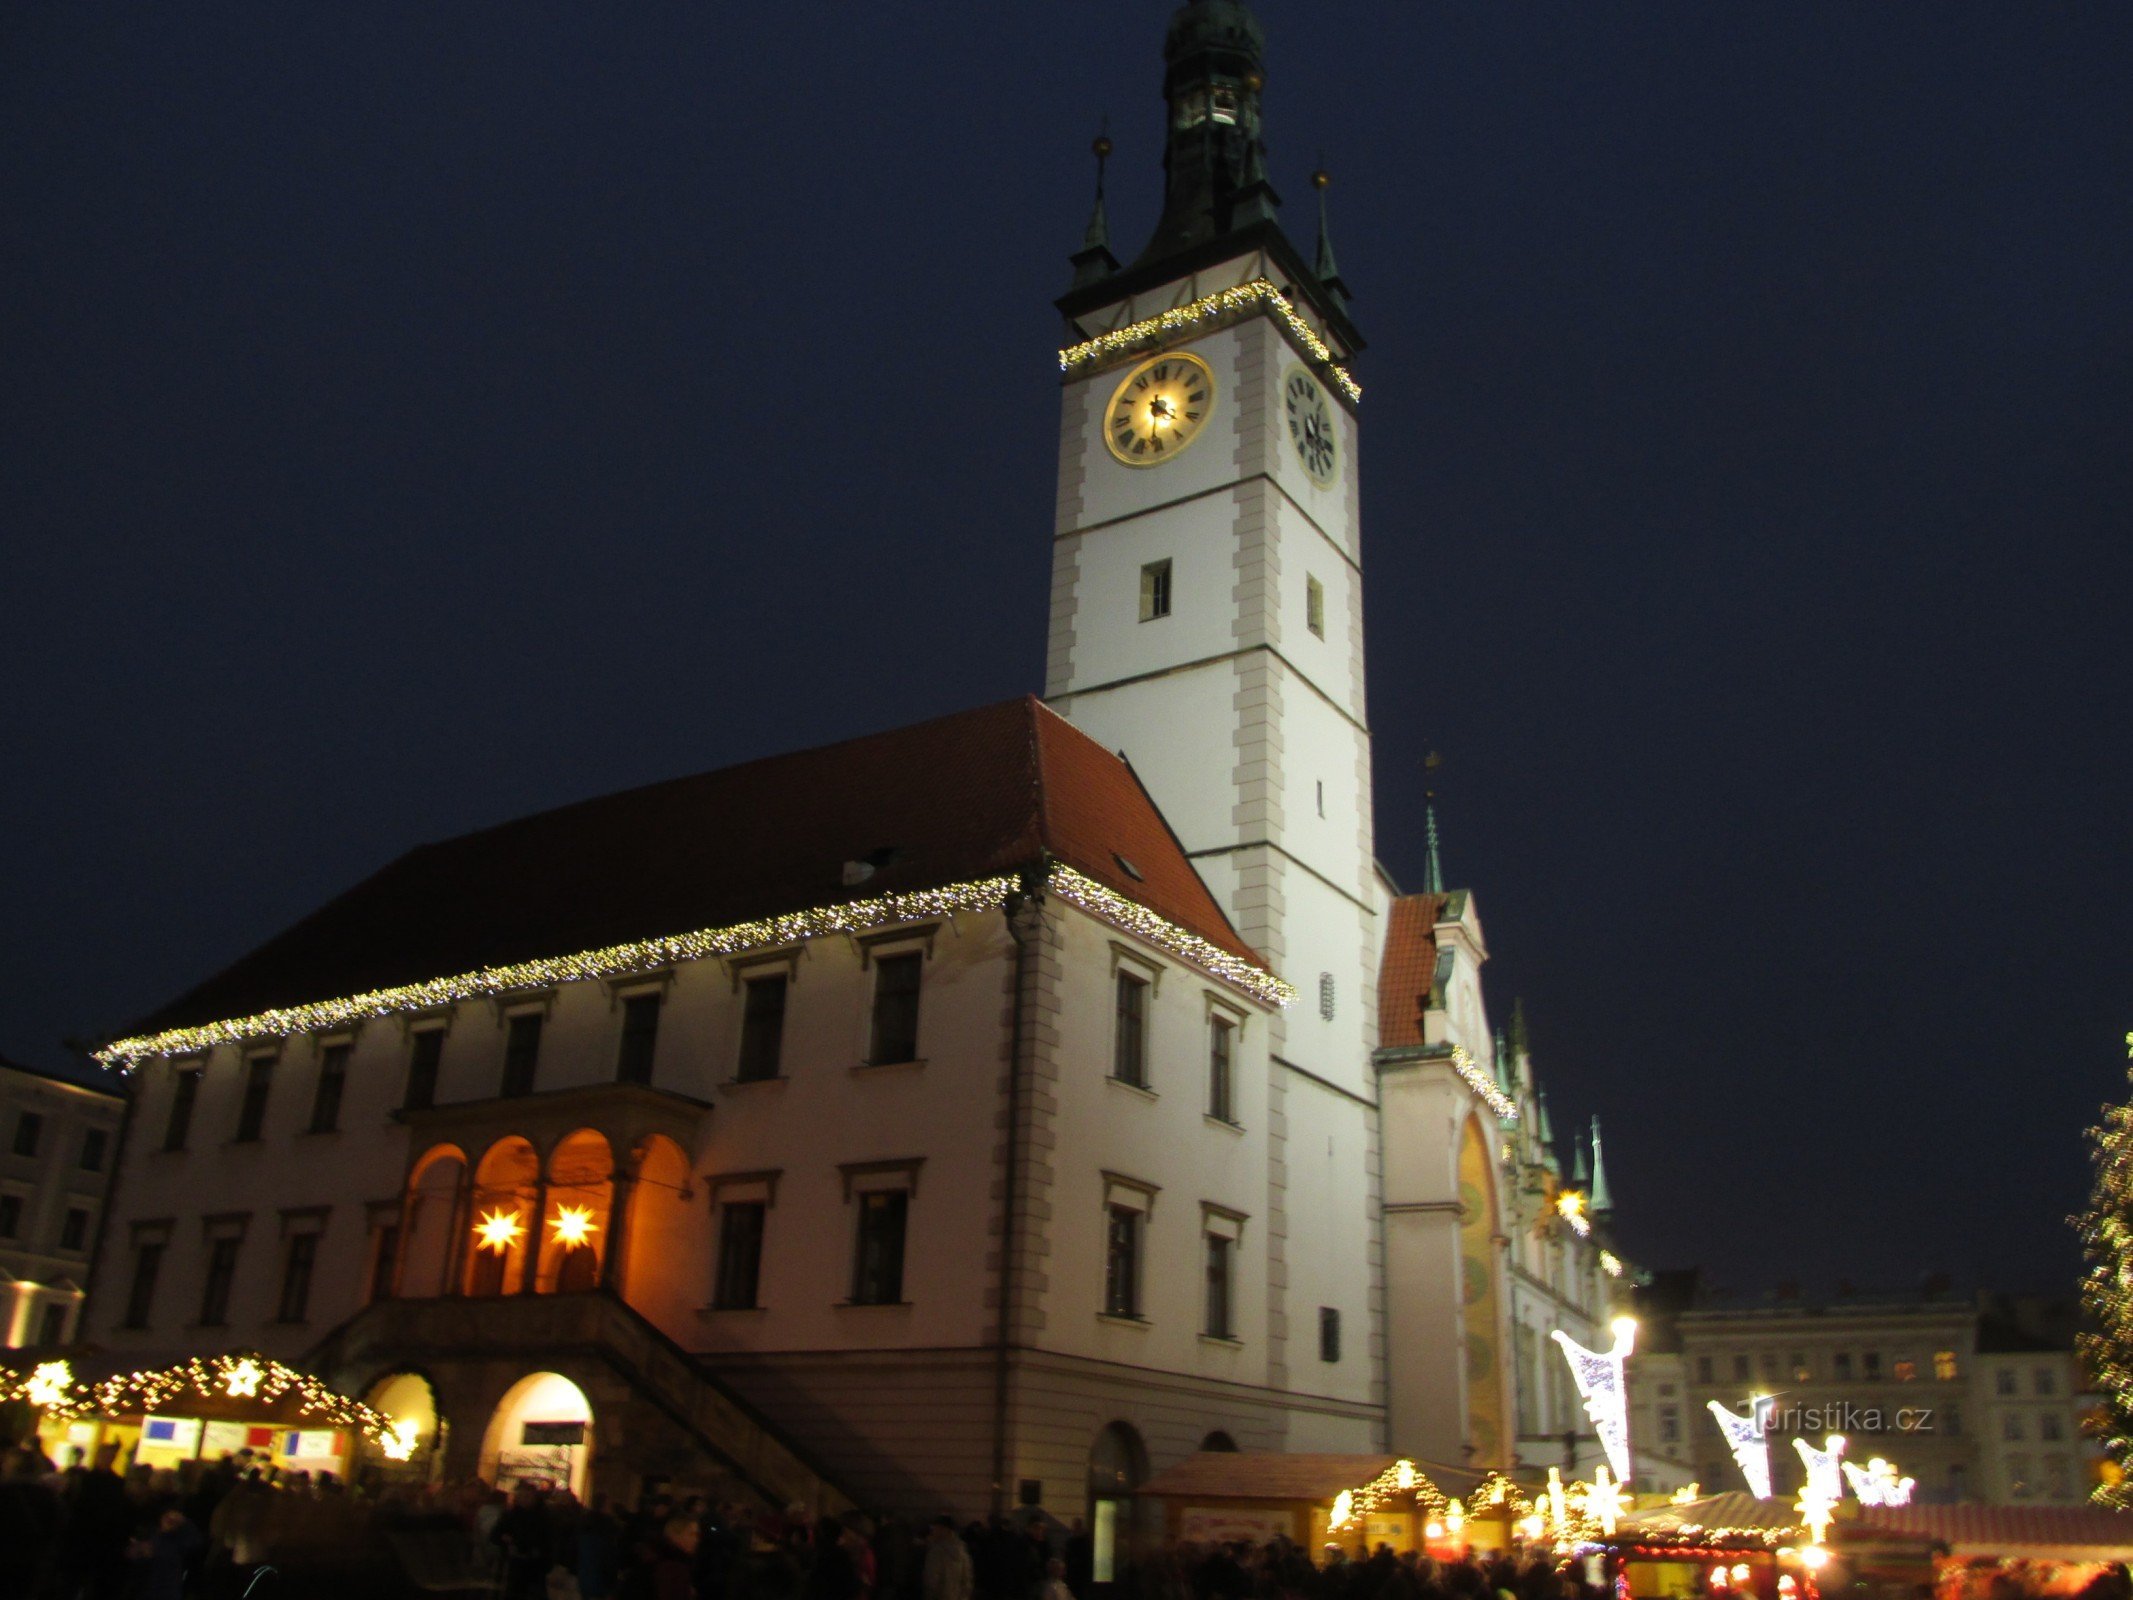 To the Advent market in Olomouc